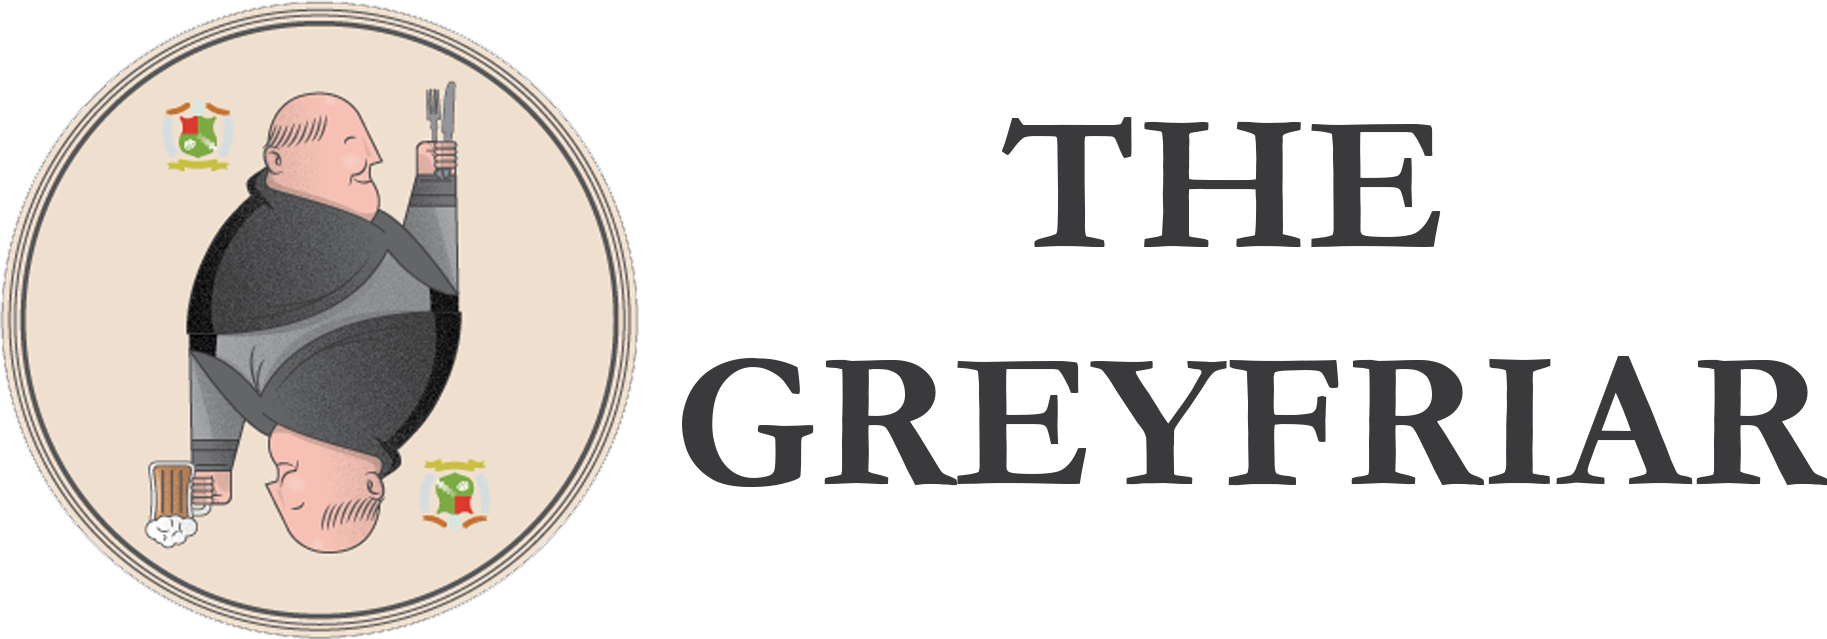 The Greyfriar